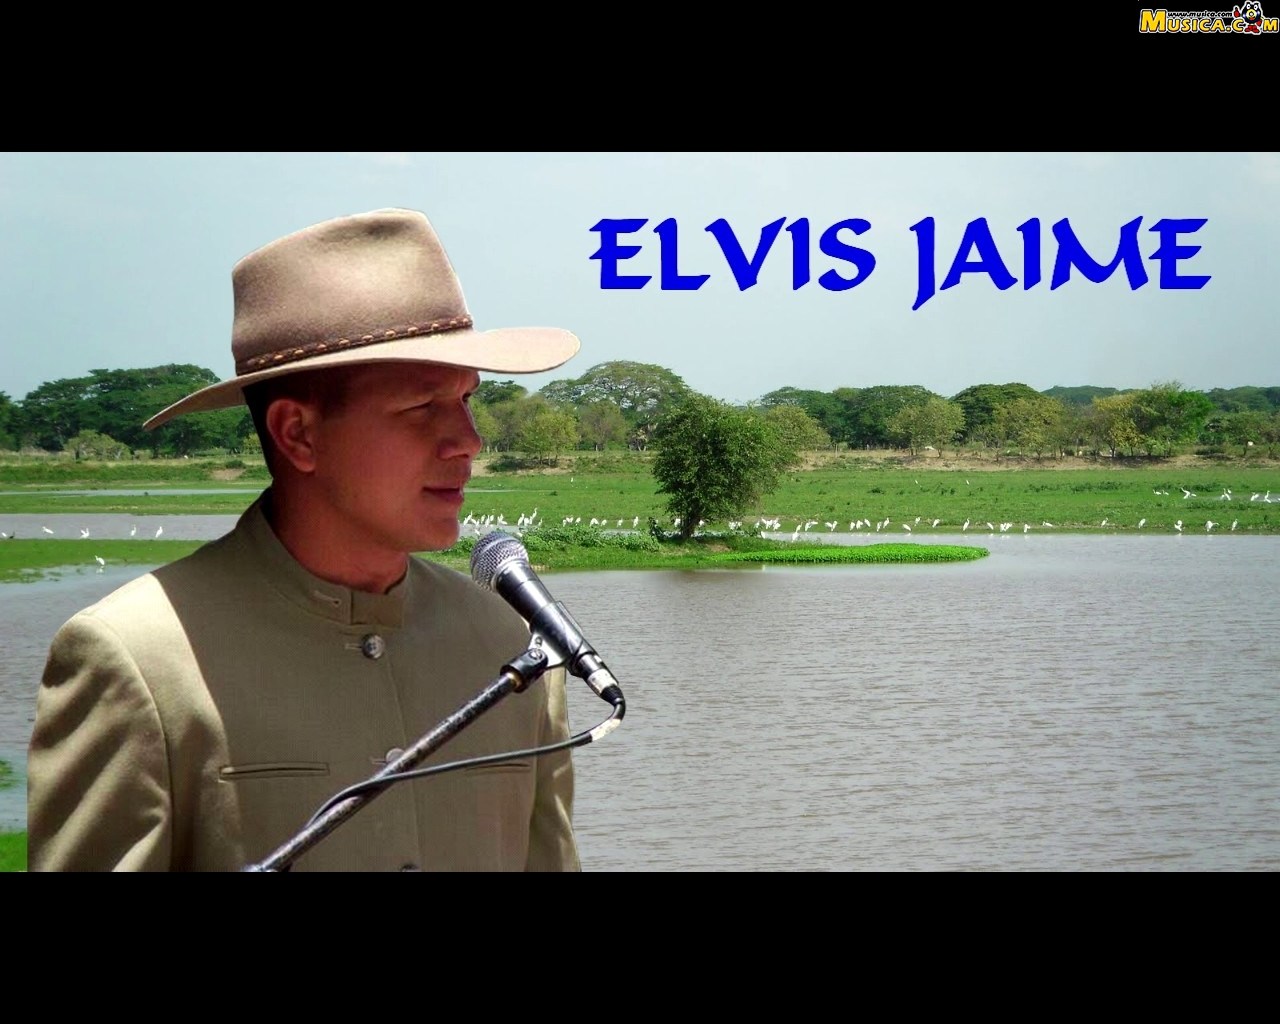 Fondo de pantalla de Elvis Jaime